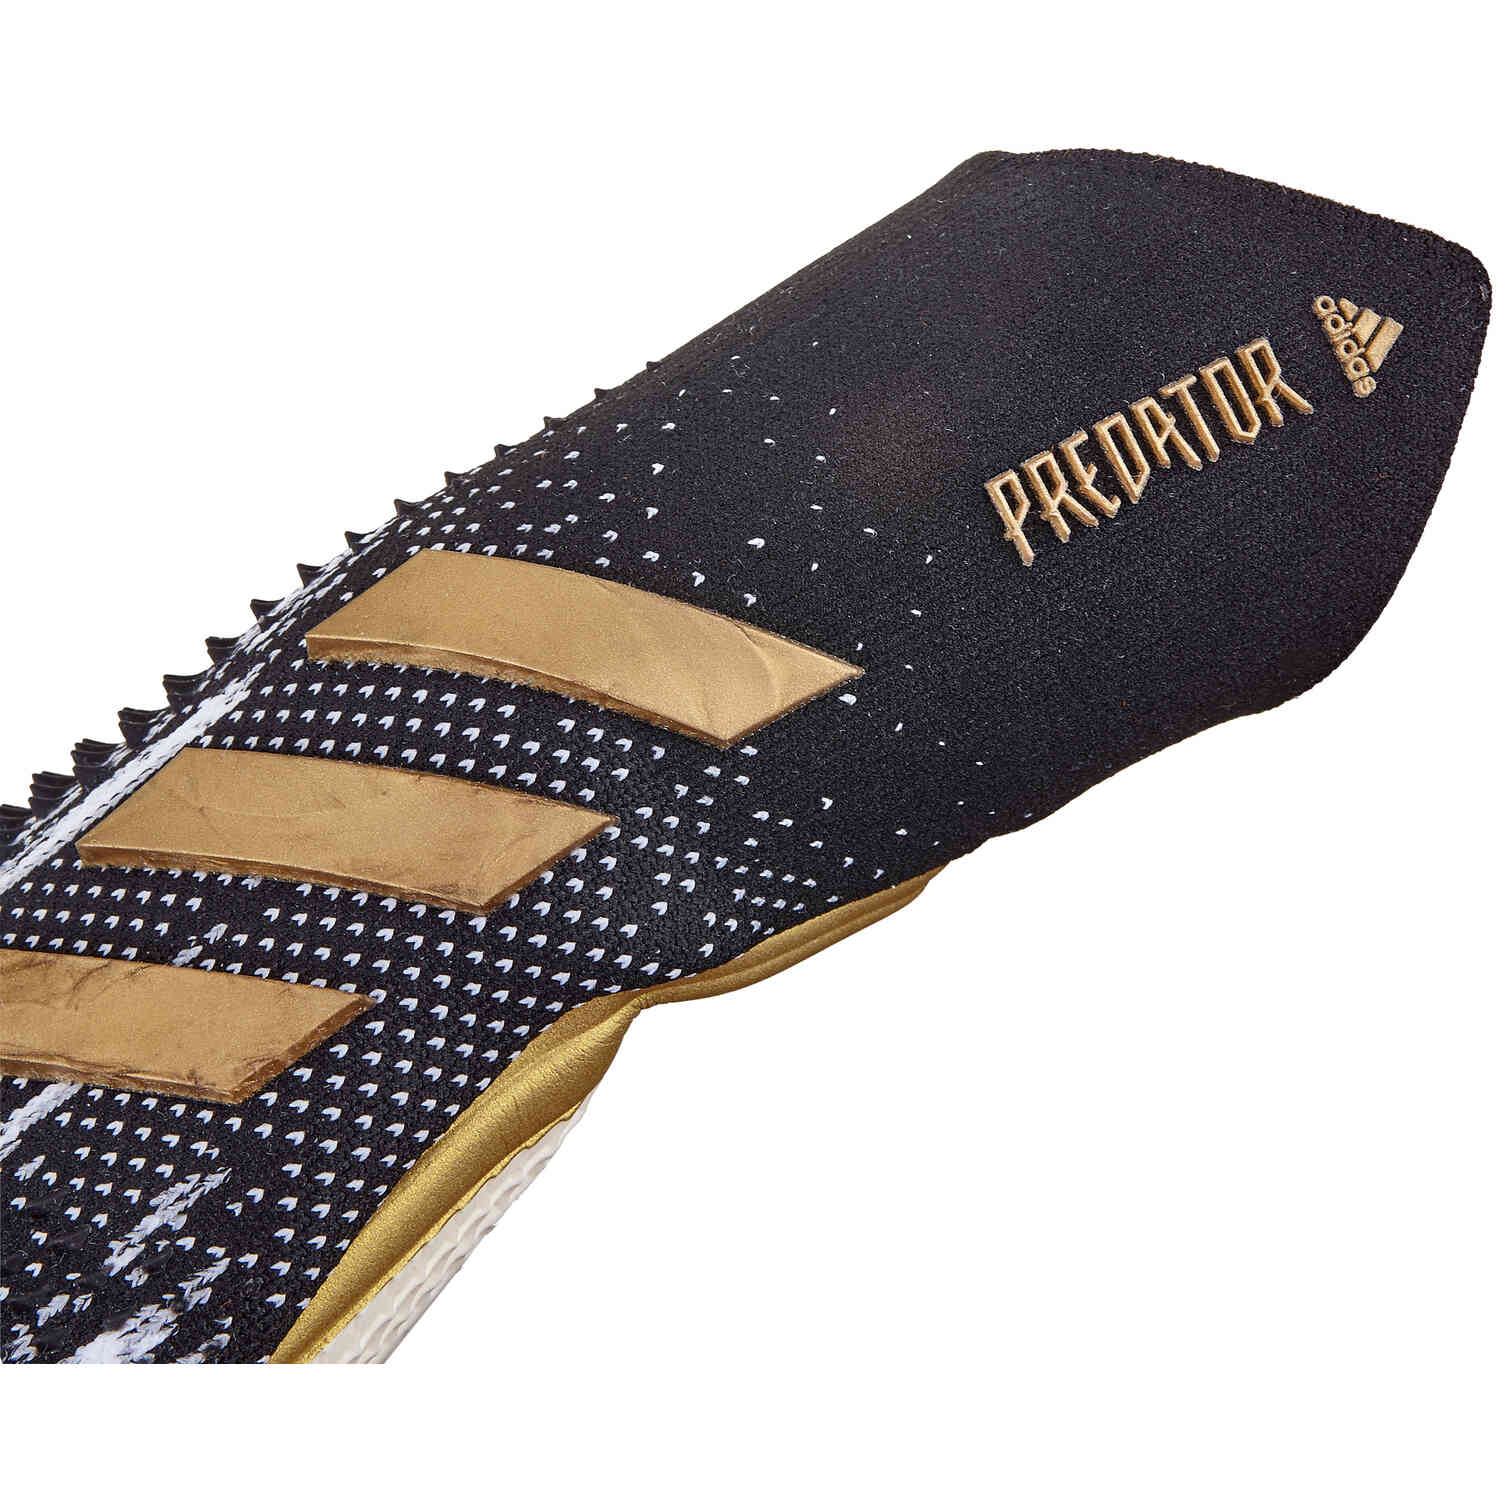 adidas Predator Pro Fingersave Goalkeeper Gloves - InFlight - Soccer Master